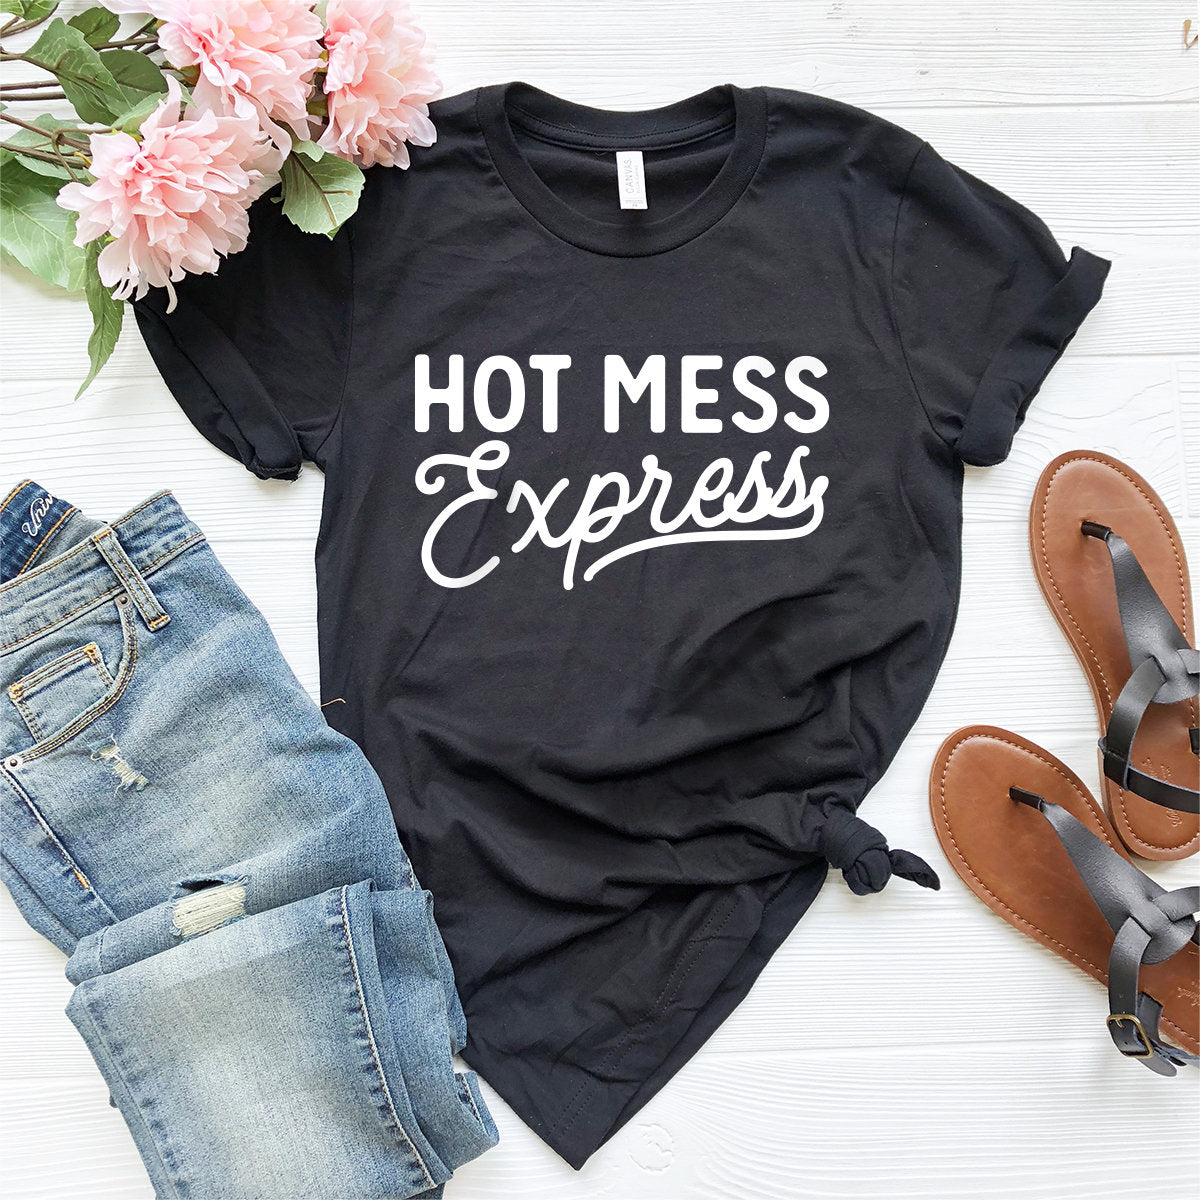 Mom Shirt, New Mom T-Shirt, Mother's Day Shirt, Hot Mess Express Shirt, Mom Life Tee, Gift For Mom, Sassy Shirt, Funny Mom T Shirt, Mom Gift - Fastdeliverytees.com